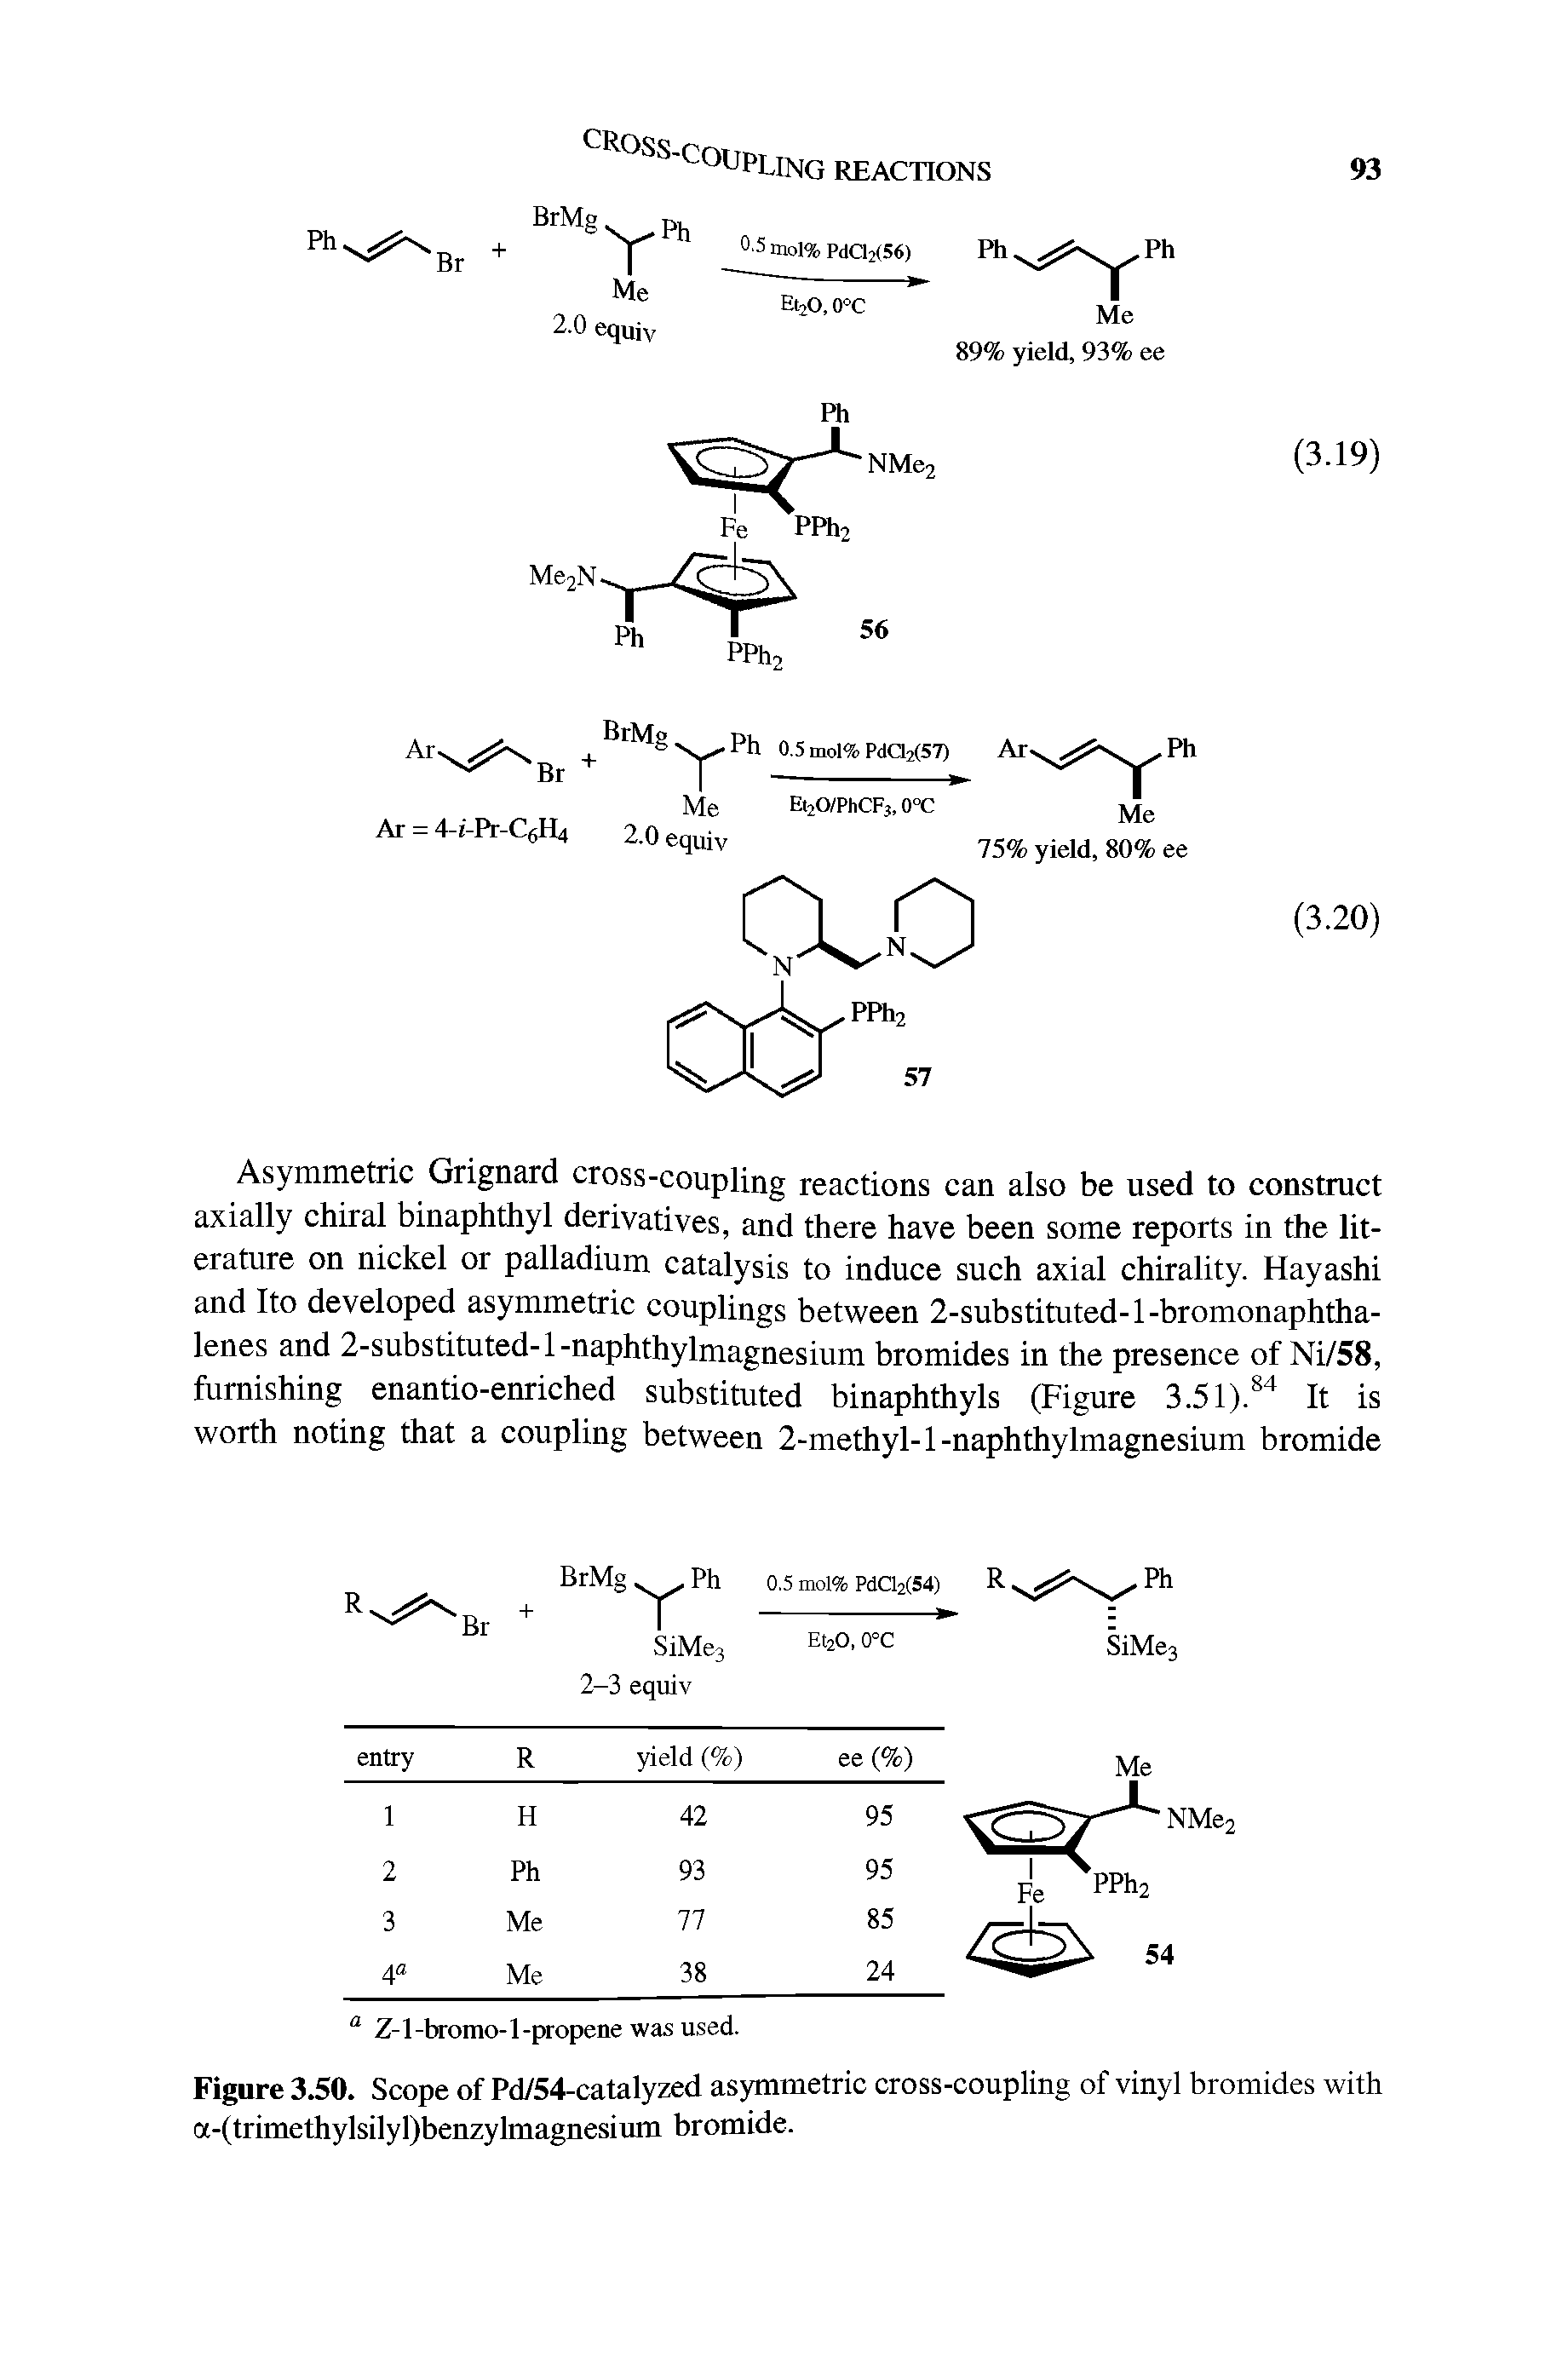 Figure 3.50. Scope of Pd/54-catalyzed asymmetric cross-coupling of vinyl bromides with a-(trimethylsilyl)benzylmagnesium bromide.